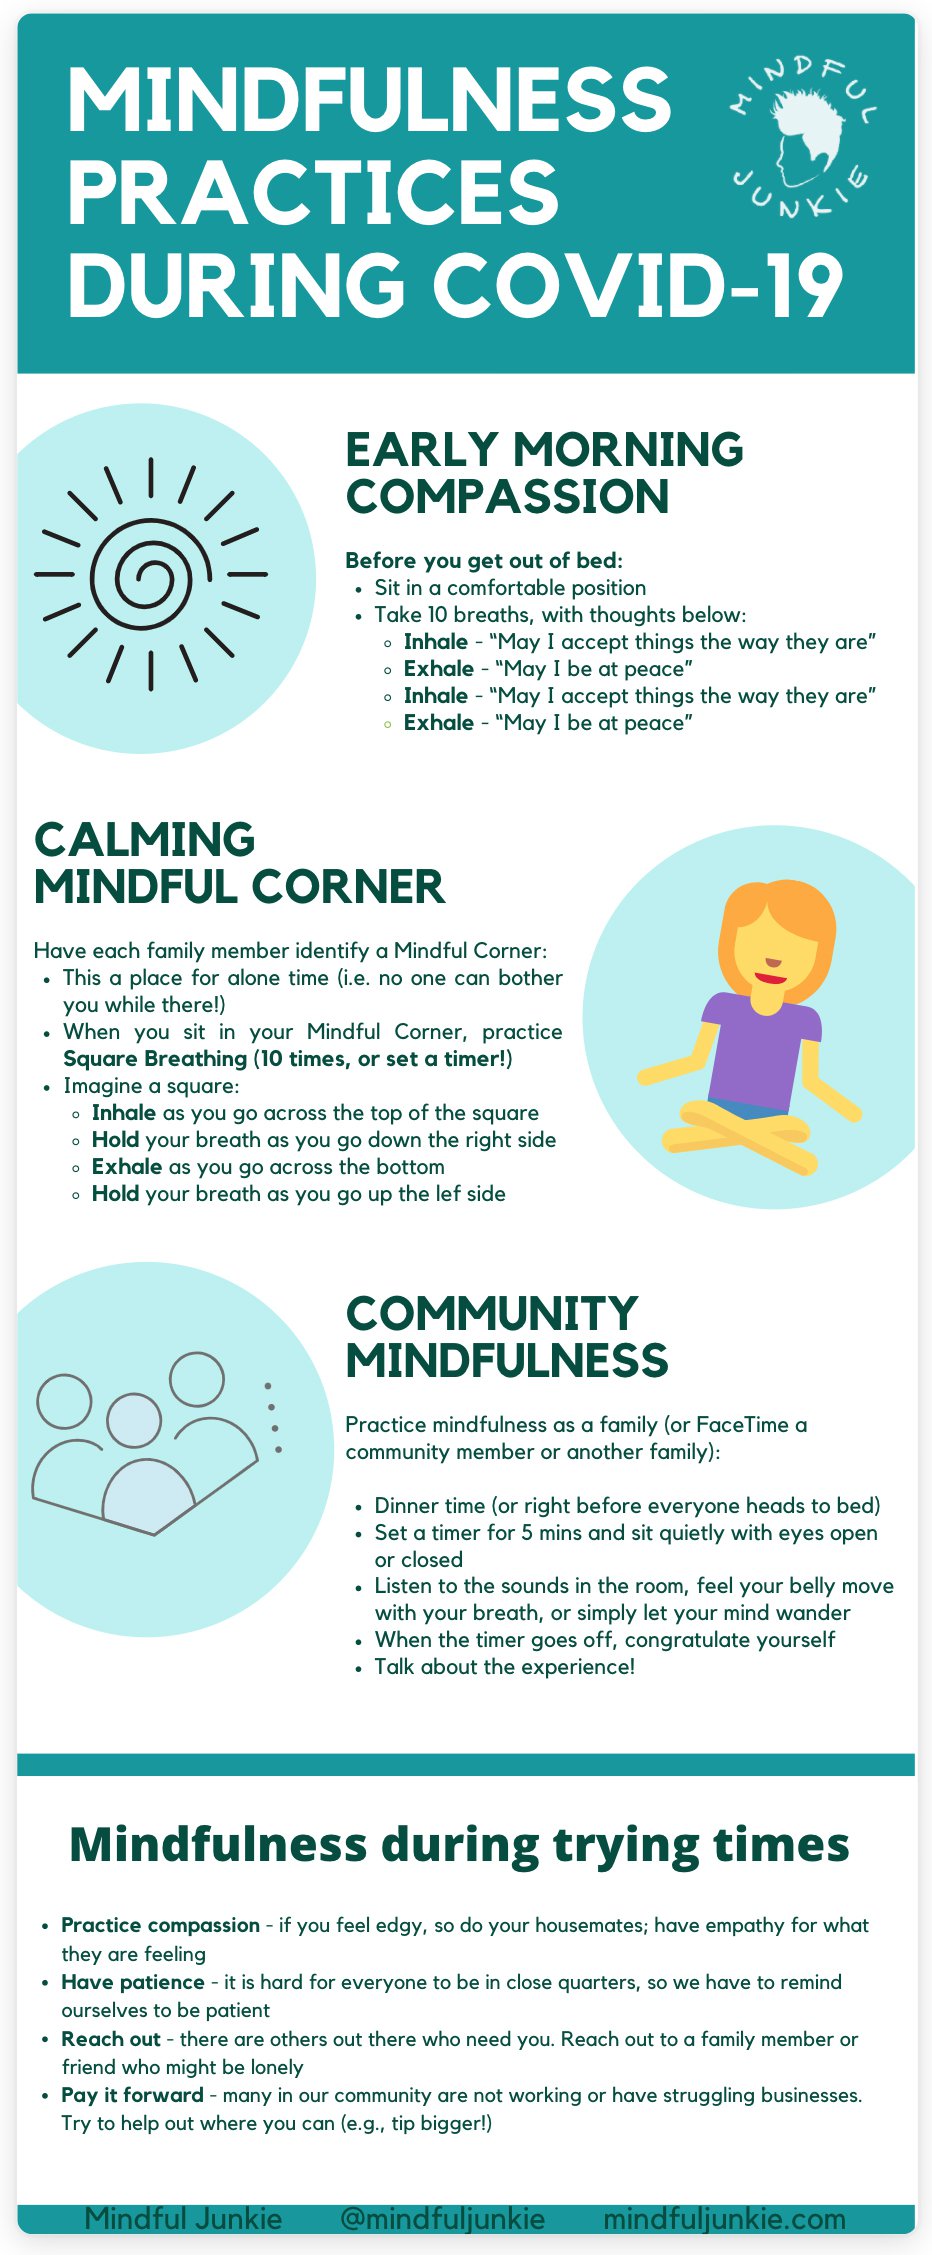 mindfulness-covid-19-stress-relief-mindfulness-junkie.jpg